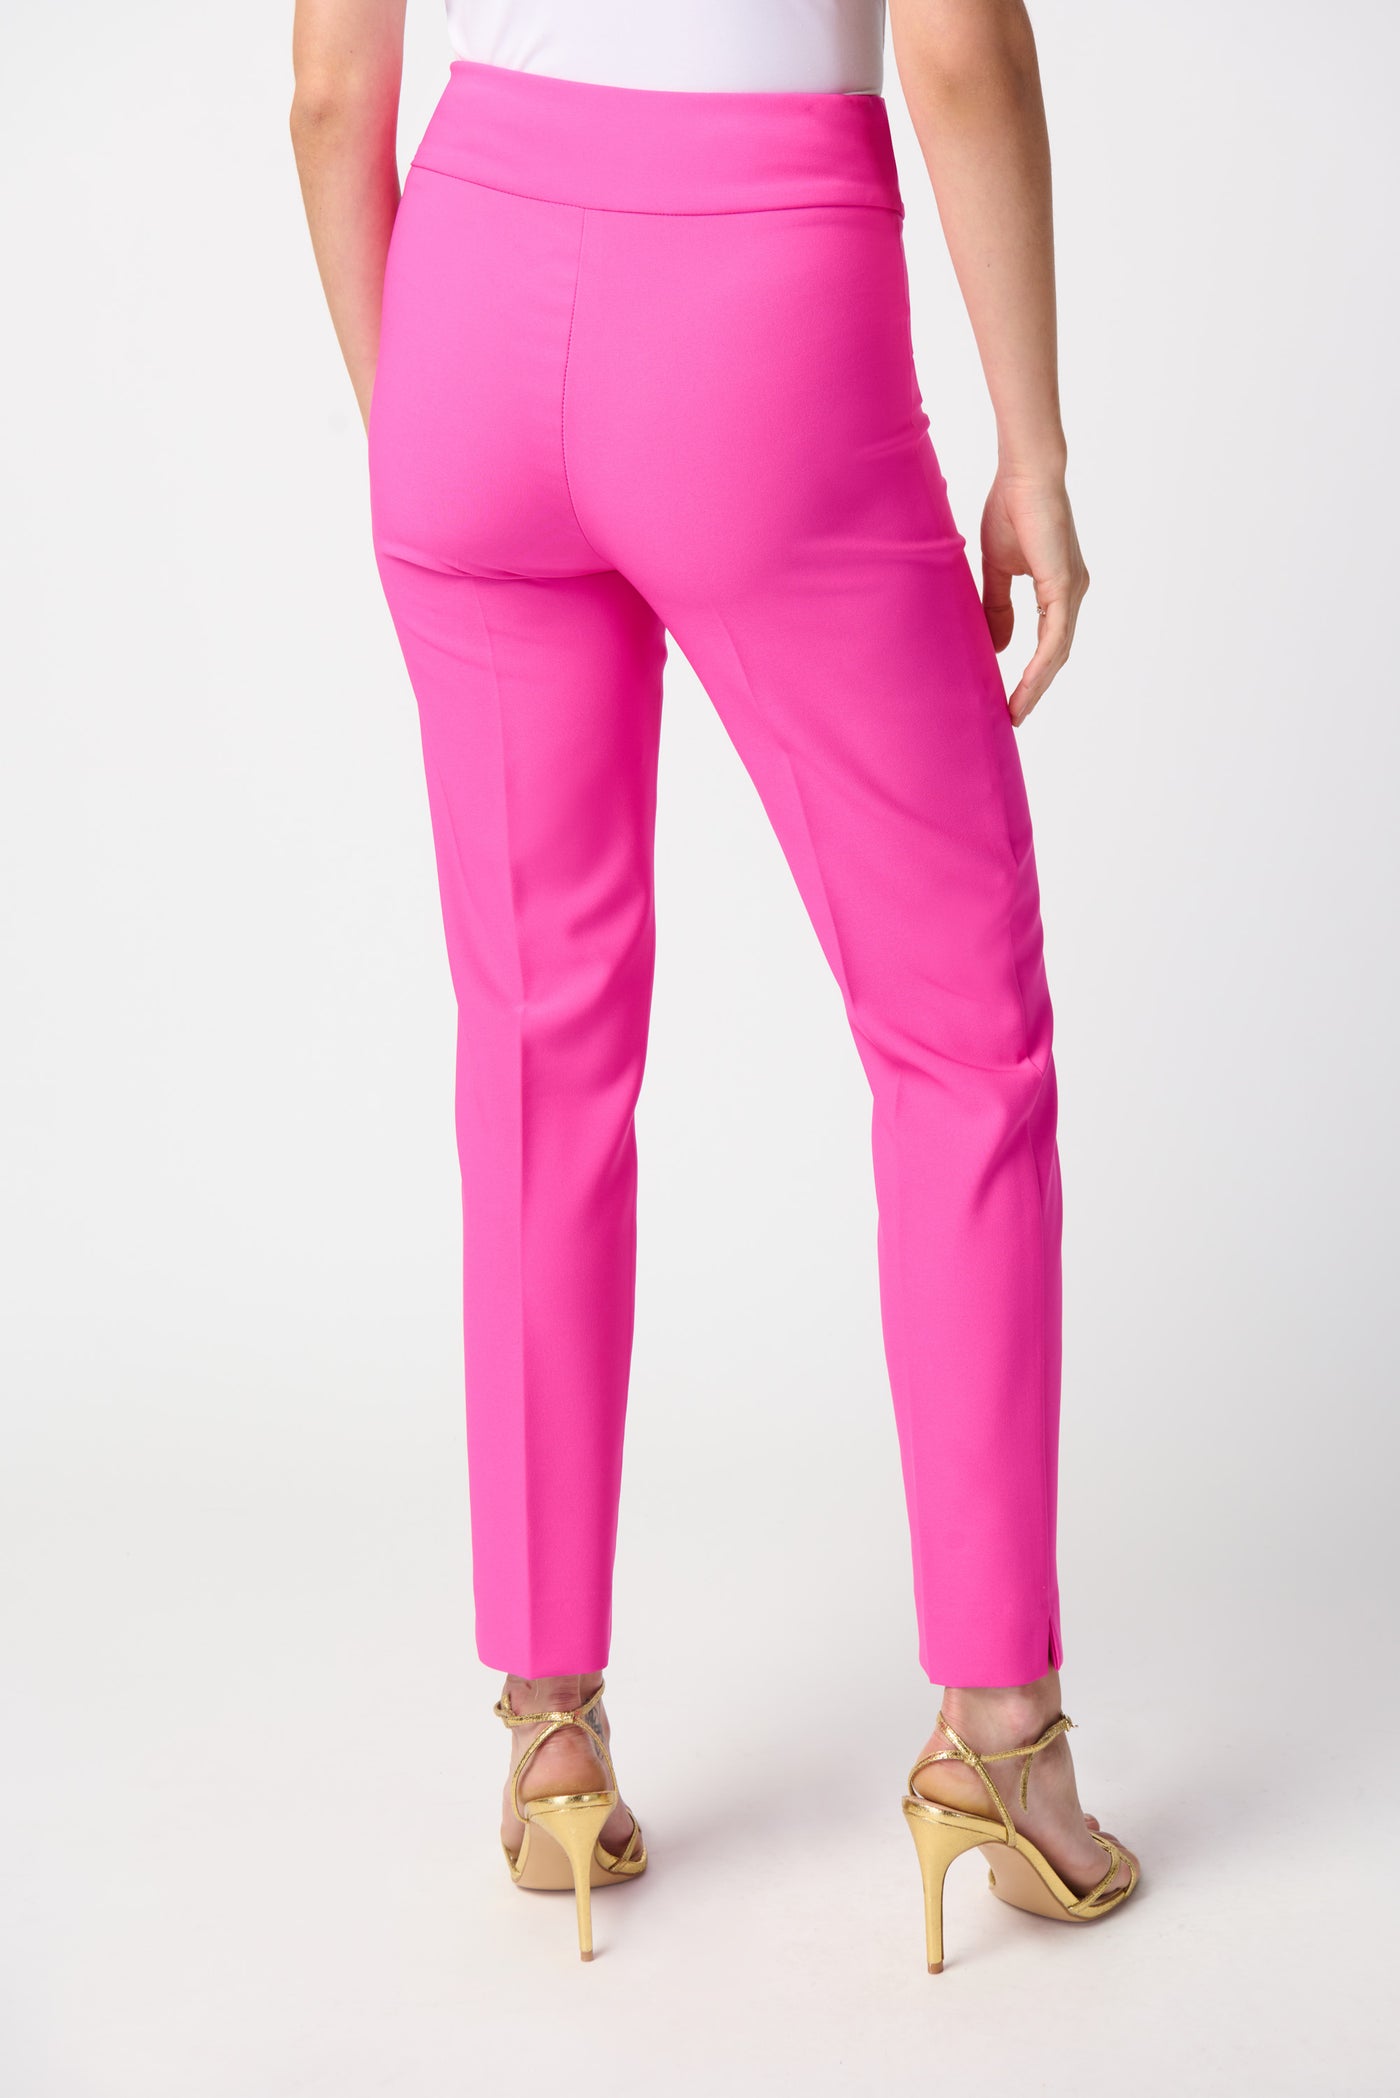 Joseph Ribkoff Ultra Pink Slim-Fit Pull-On Pants